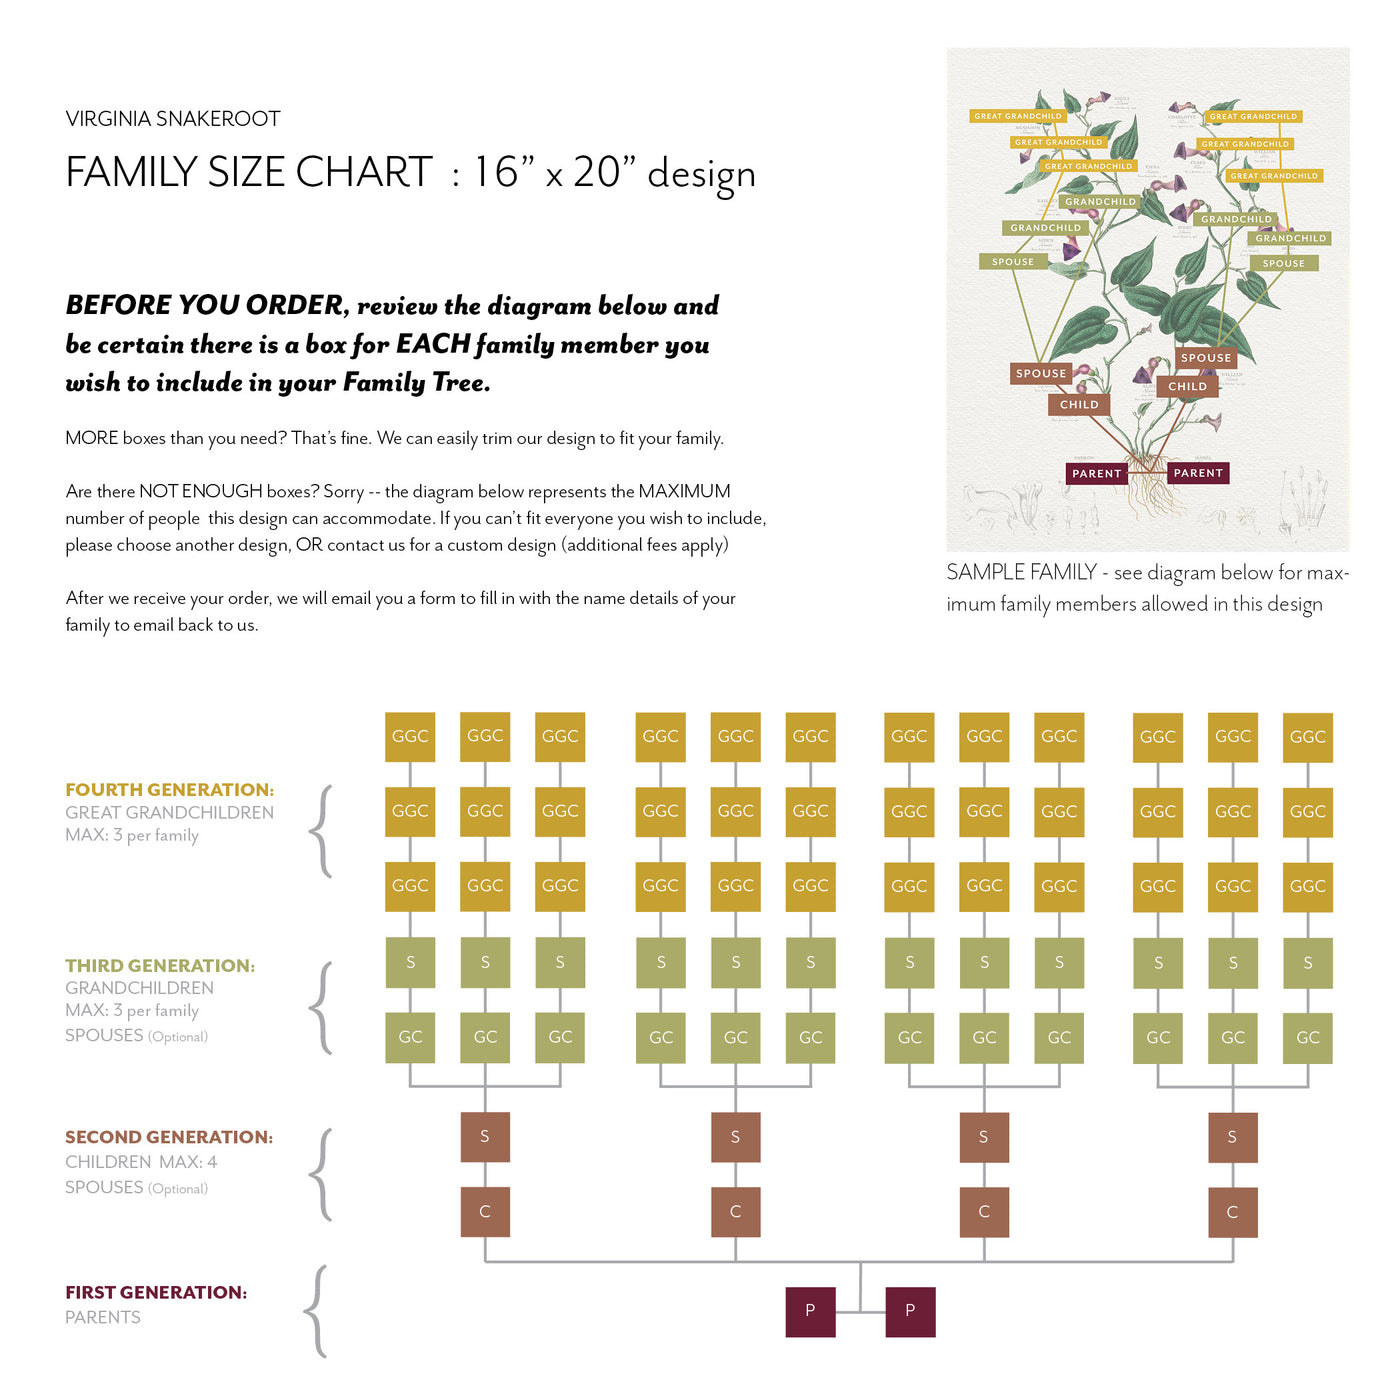 Family size Chart  16 x 20 print size - VIRGINIA SNAKEROOT FAMILY BOTANIC - Family Botanic